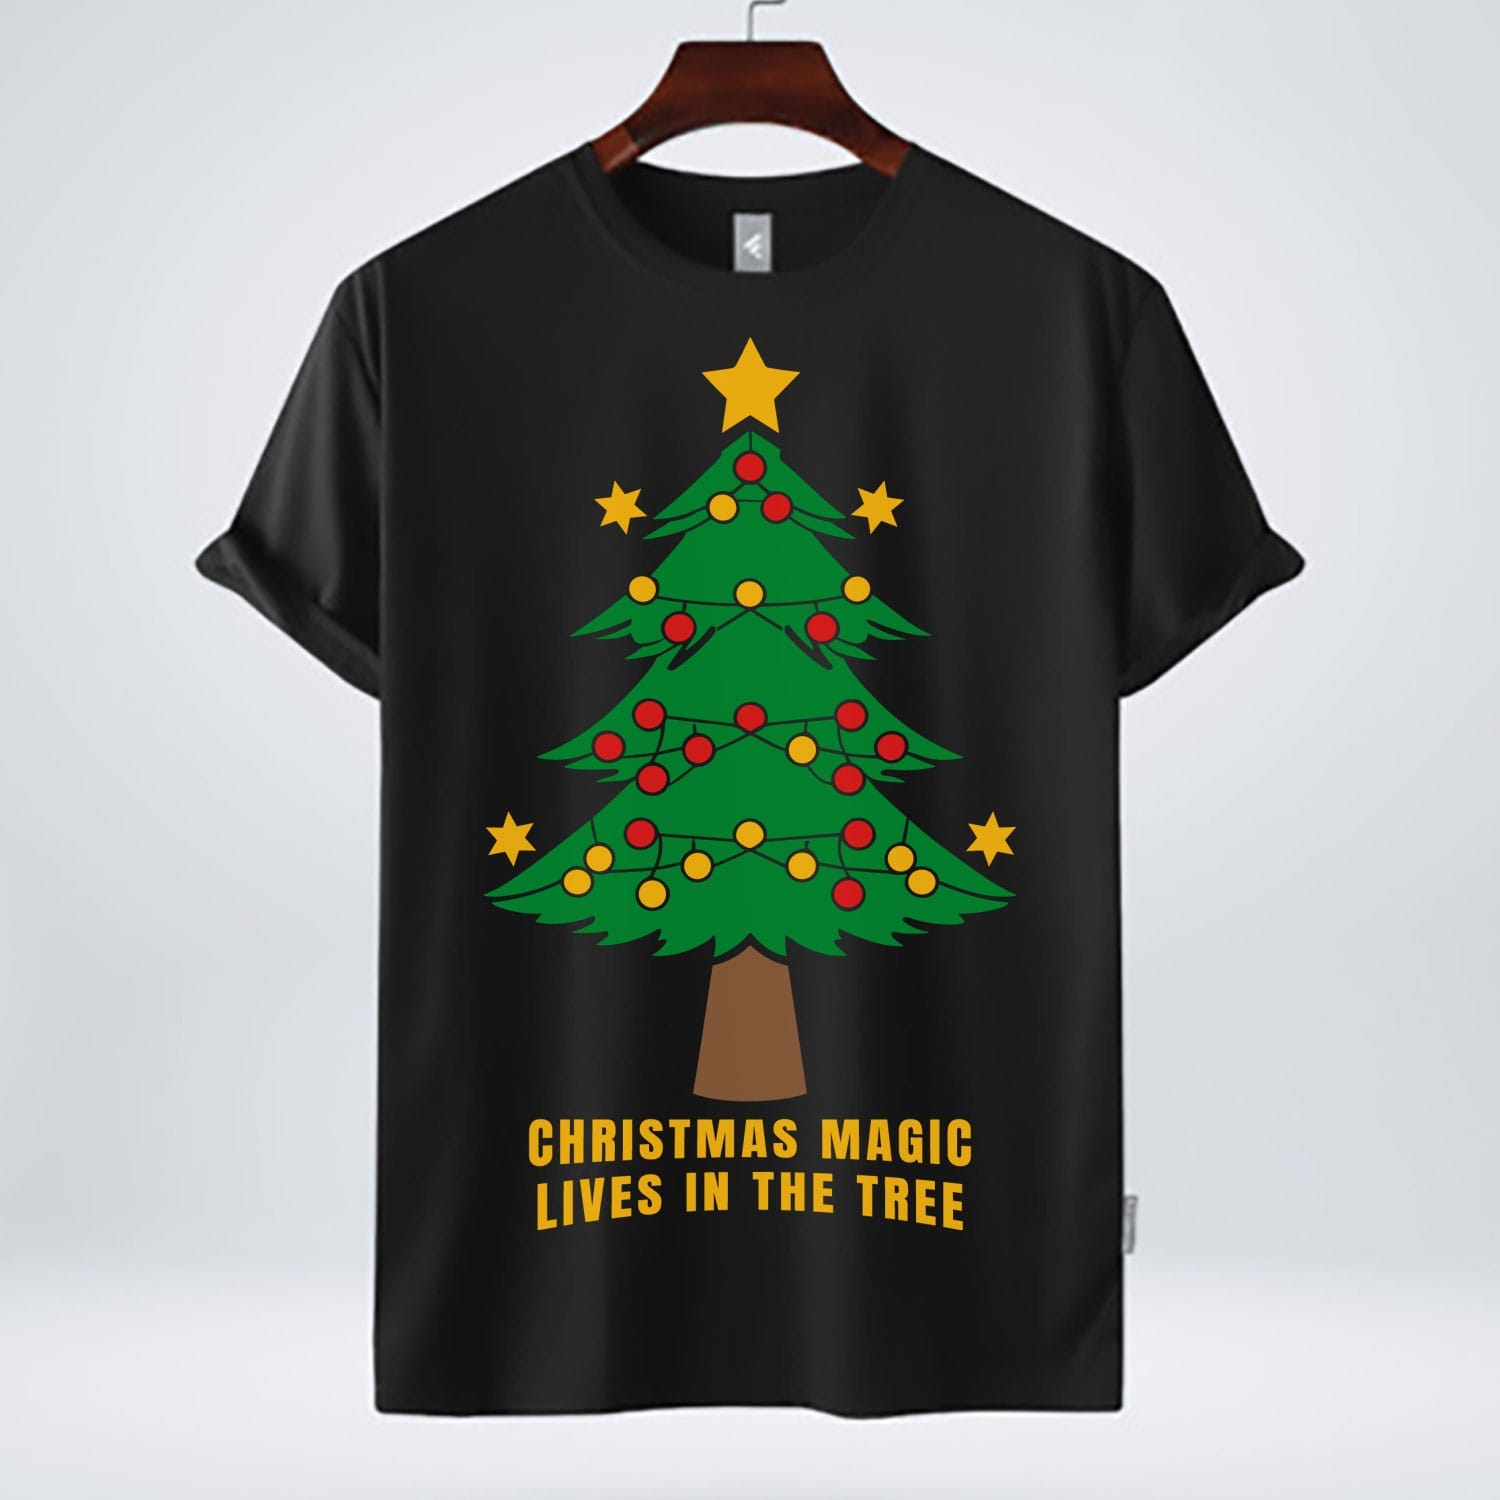 Christmas Magic lives in the tree free tshirt design